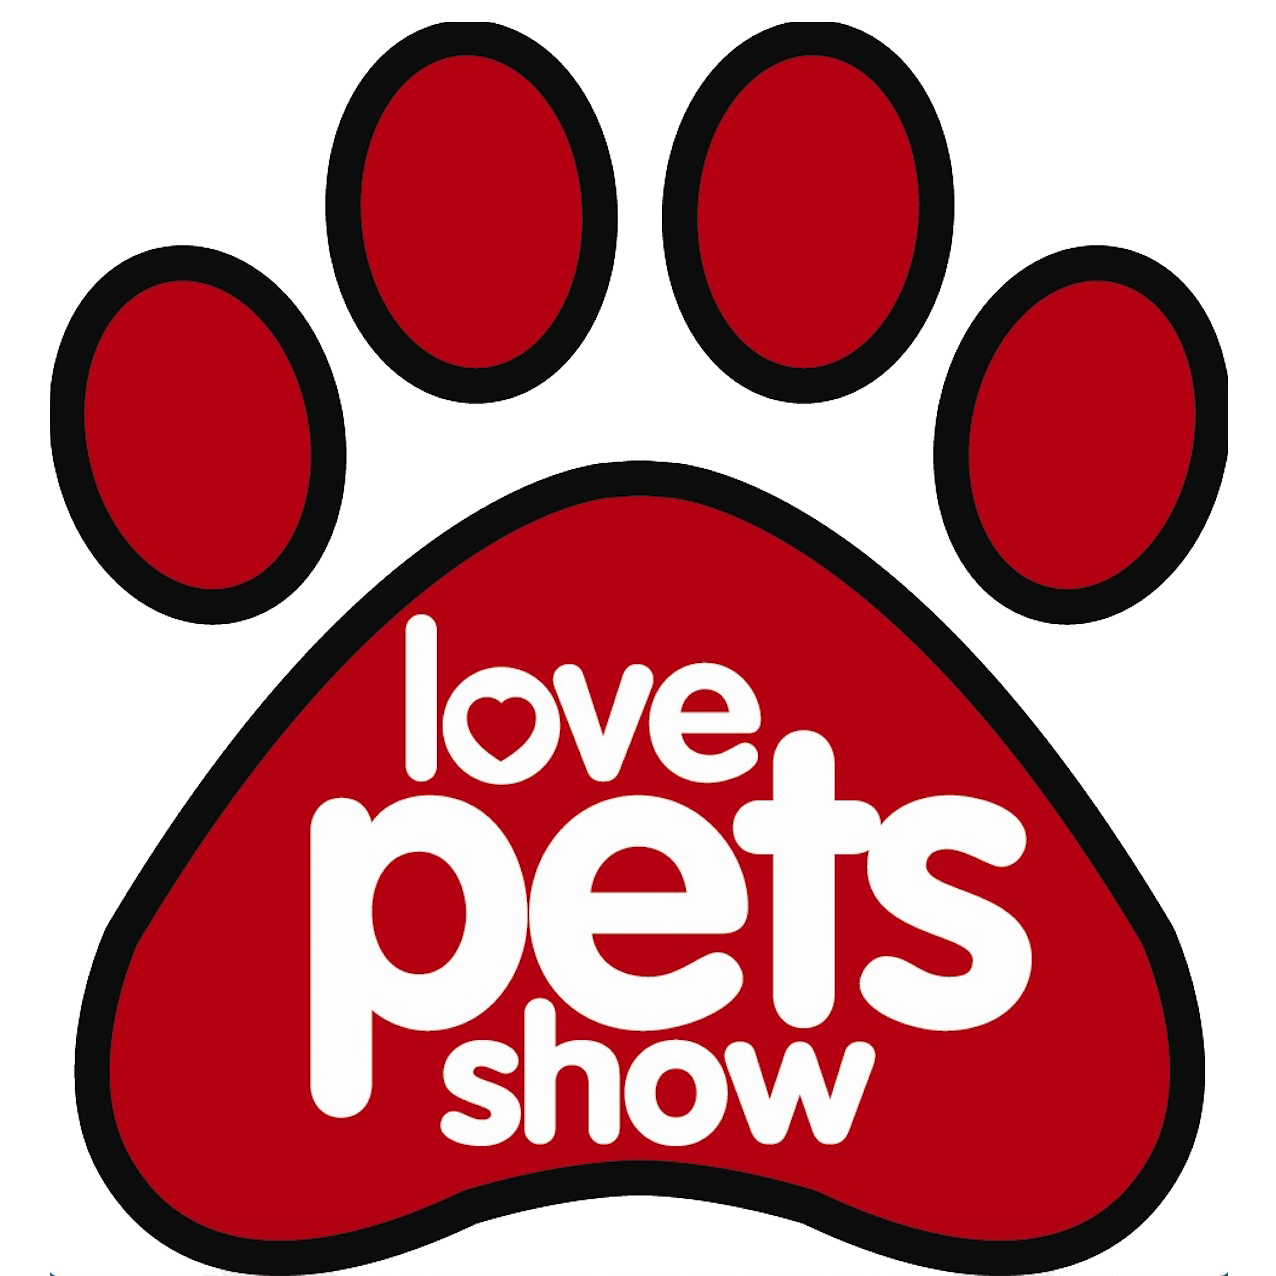 Get love pets. Шоу для питомцев. Pet Love. Lovely Pet show. Lovely Pets.